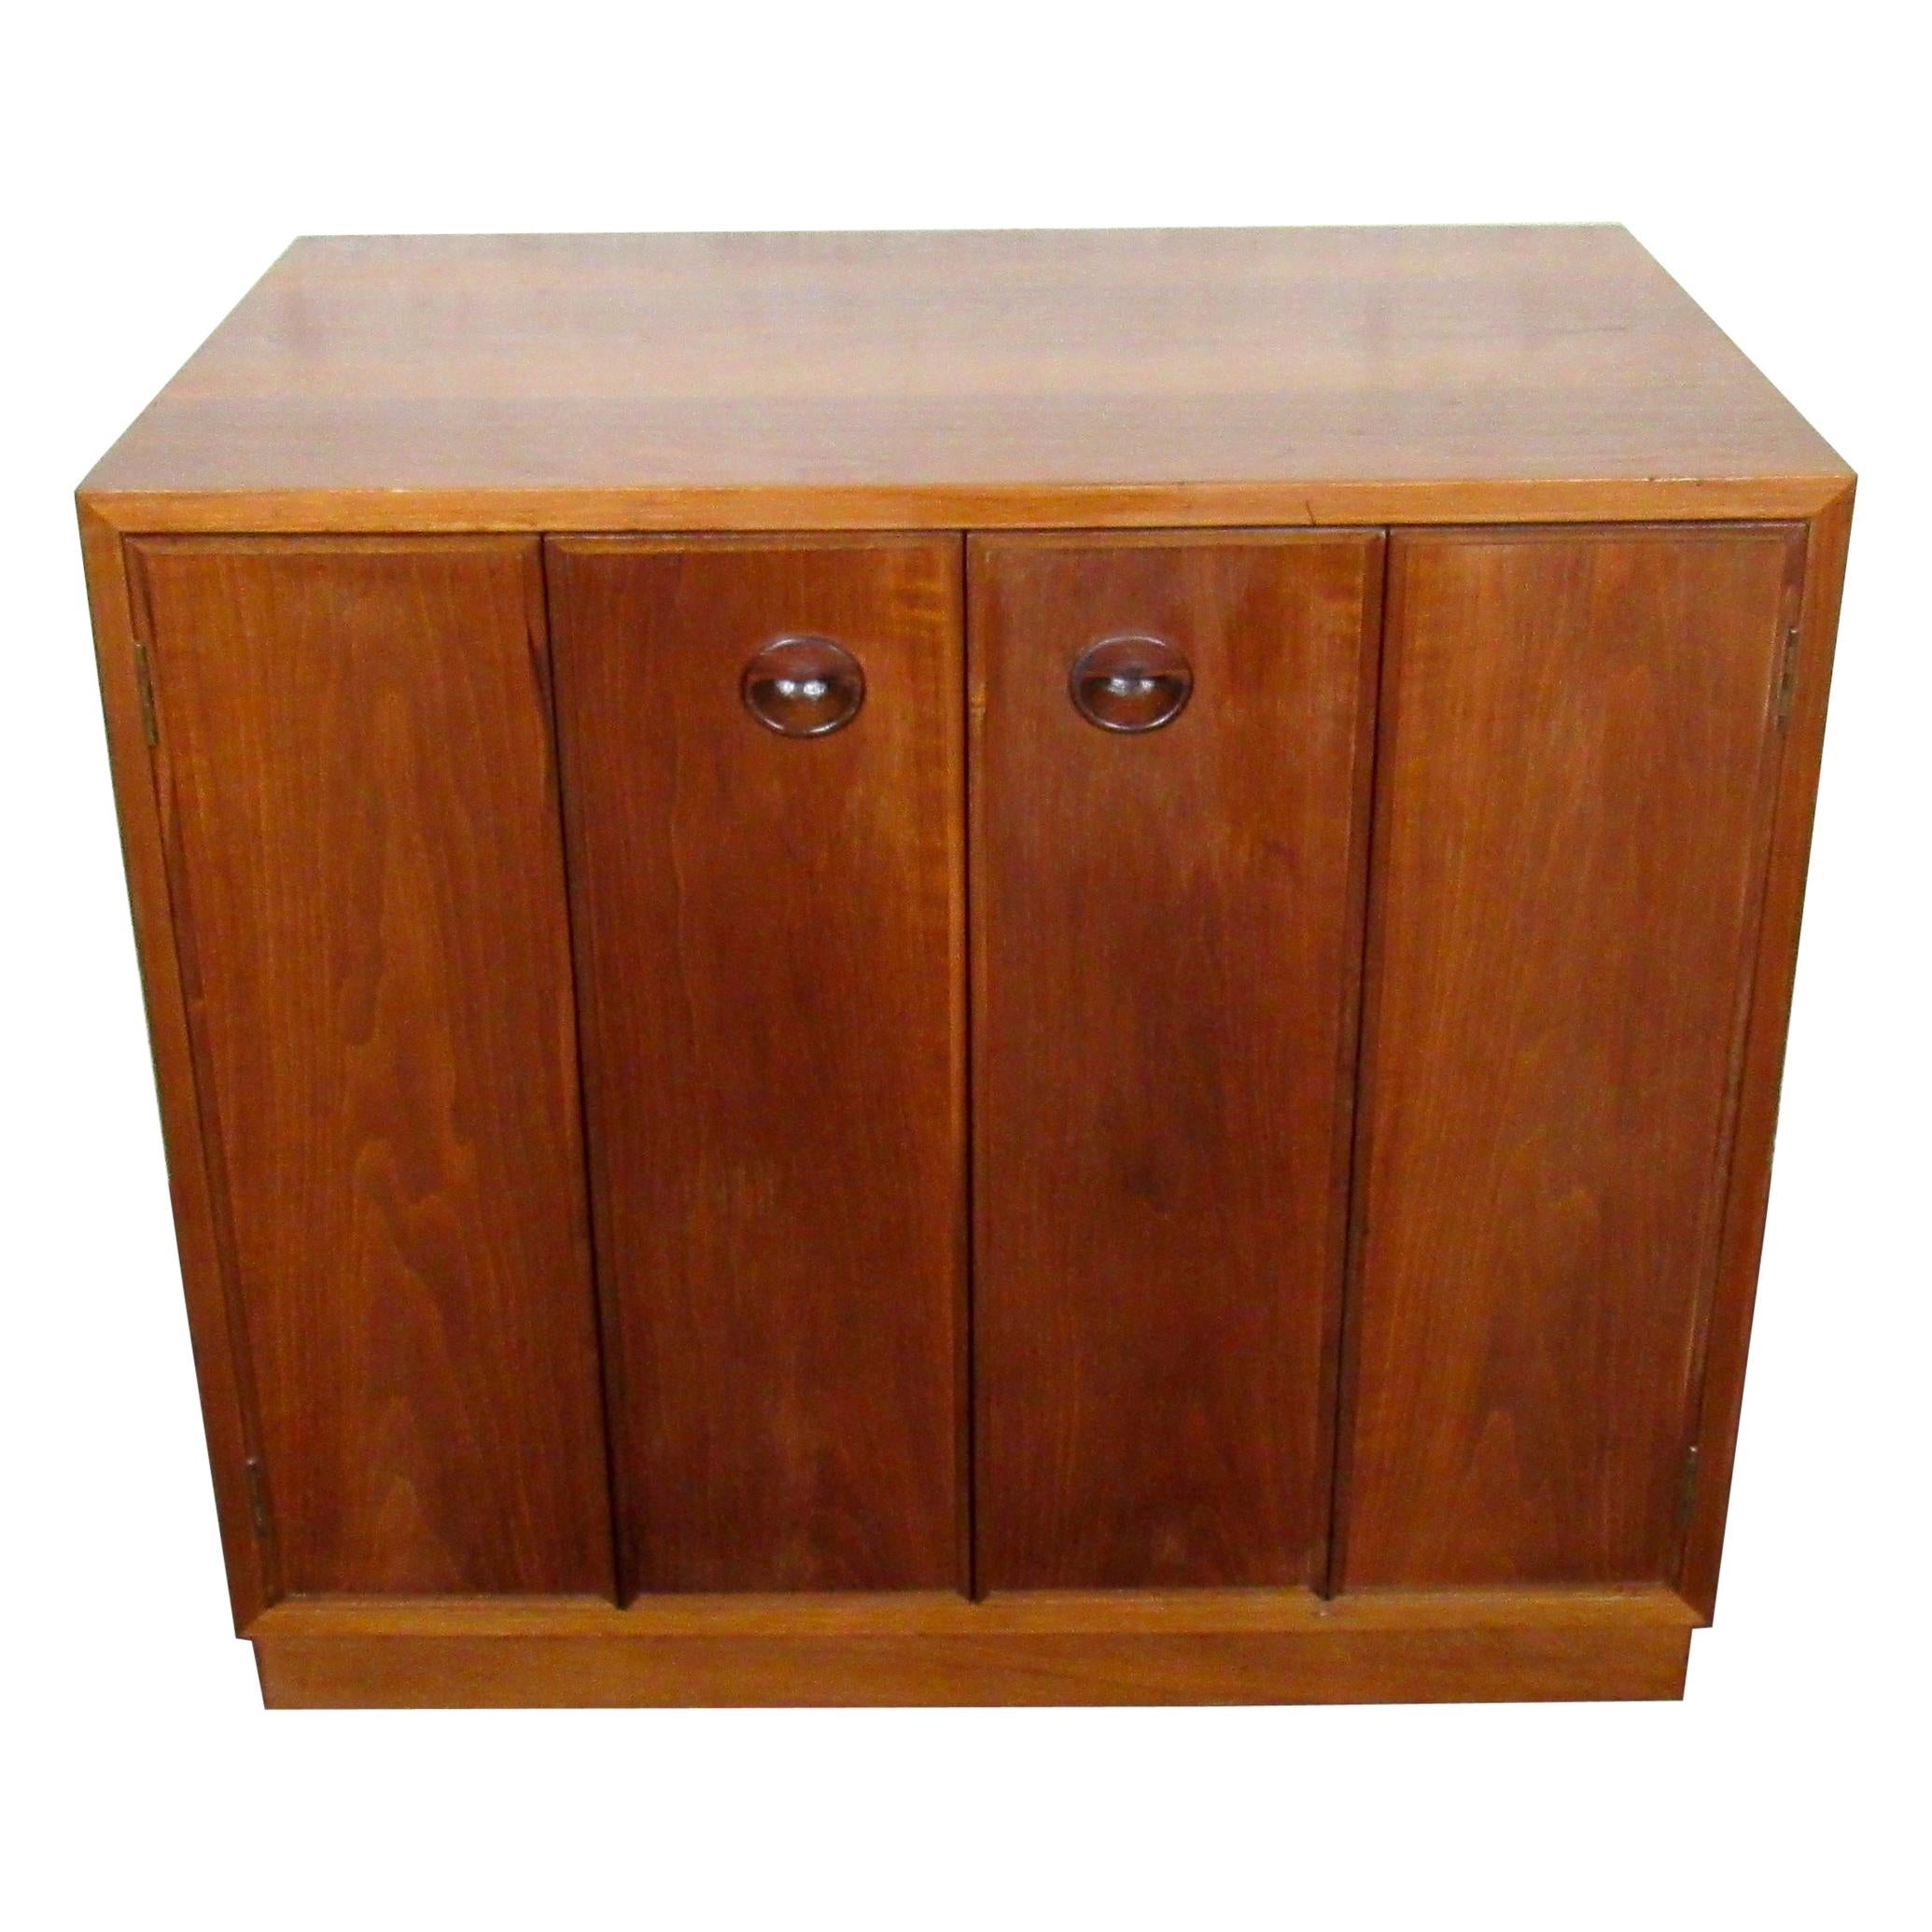 Vintage Mid-Century Modern Cabinet